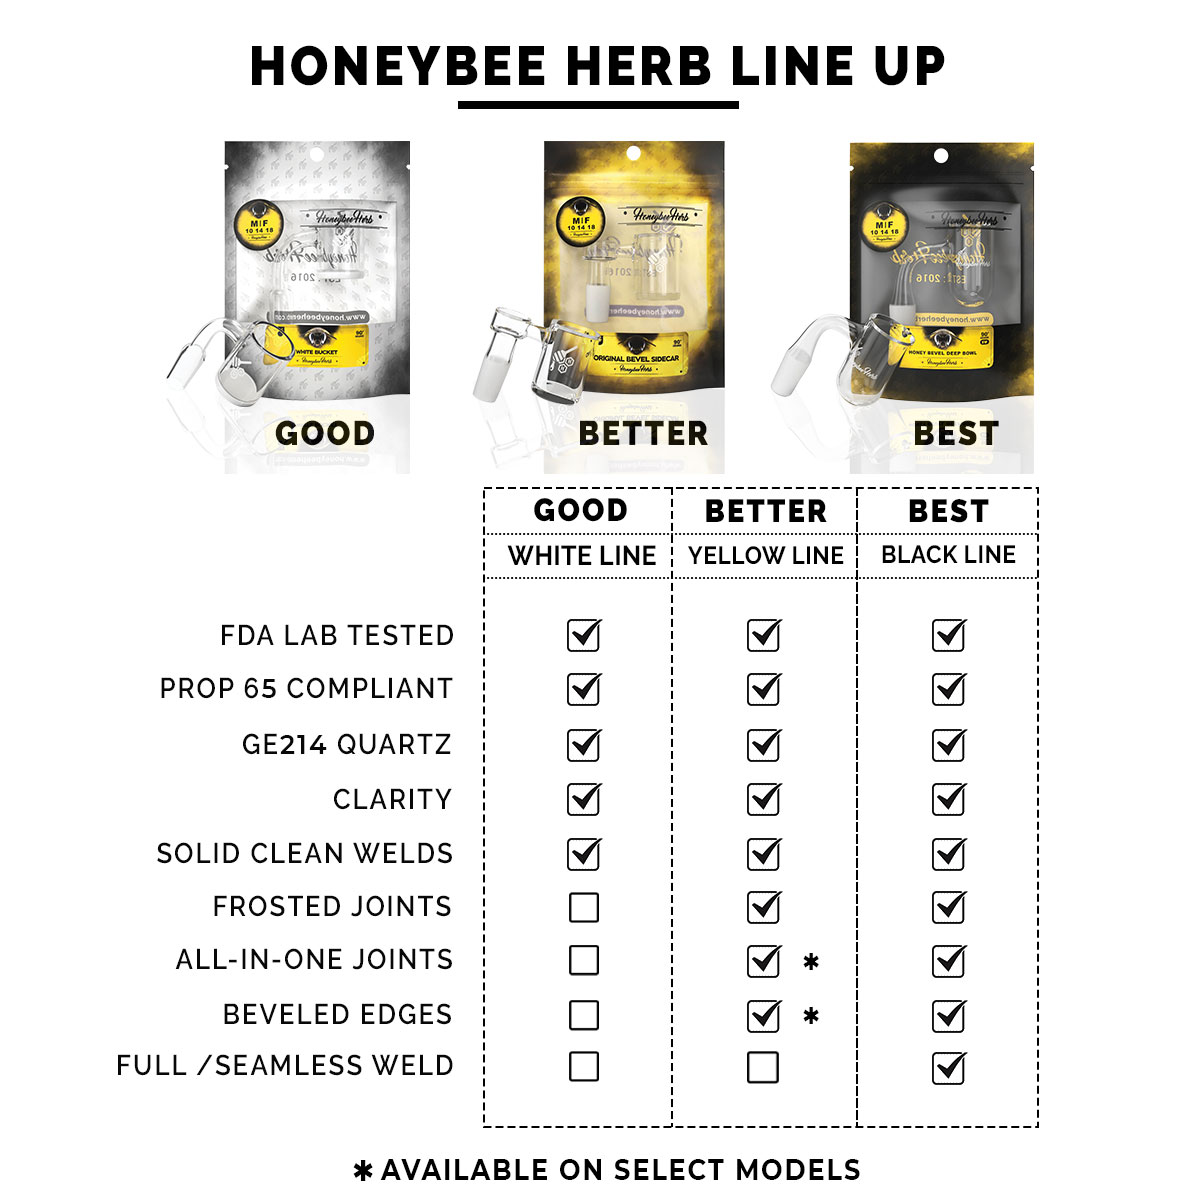 Honeybee Herb Quartz Banger Comparison Chart - Quality Levels and Features